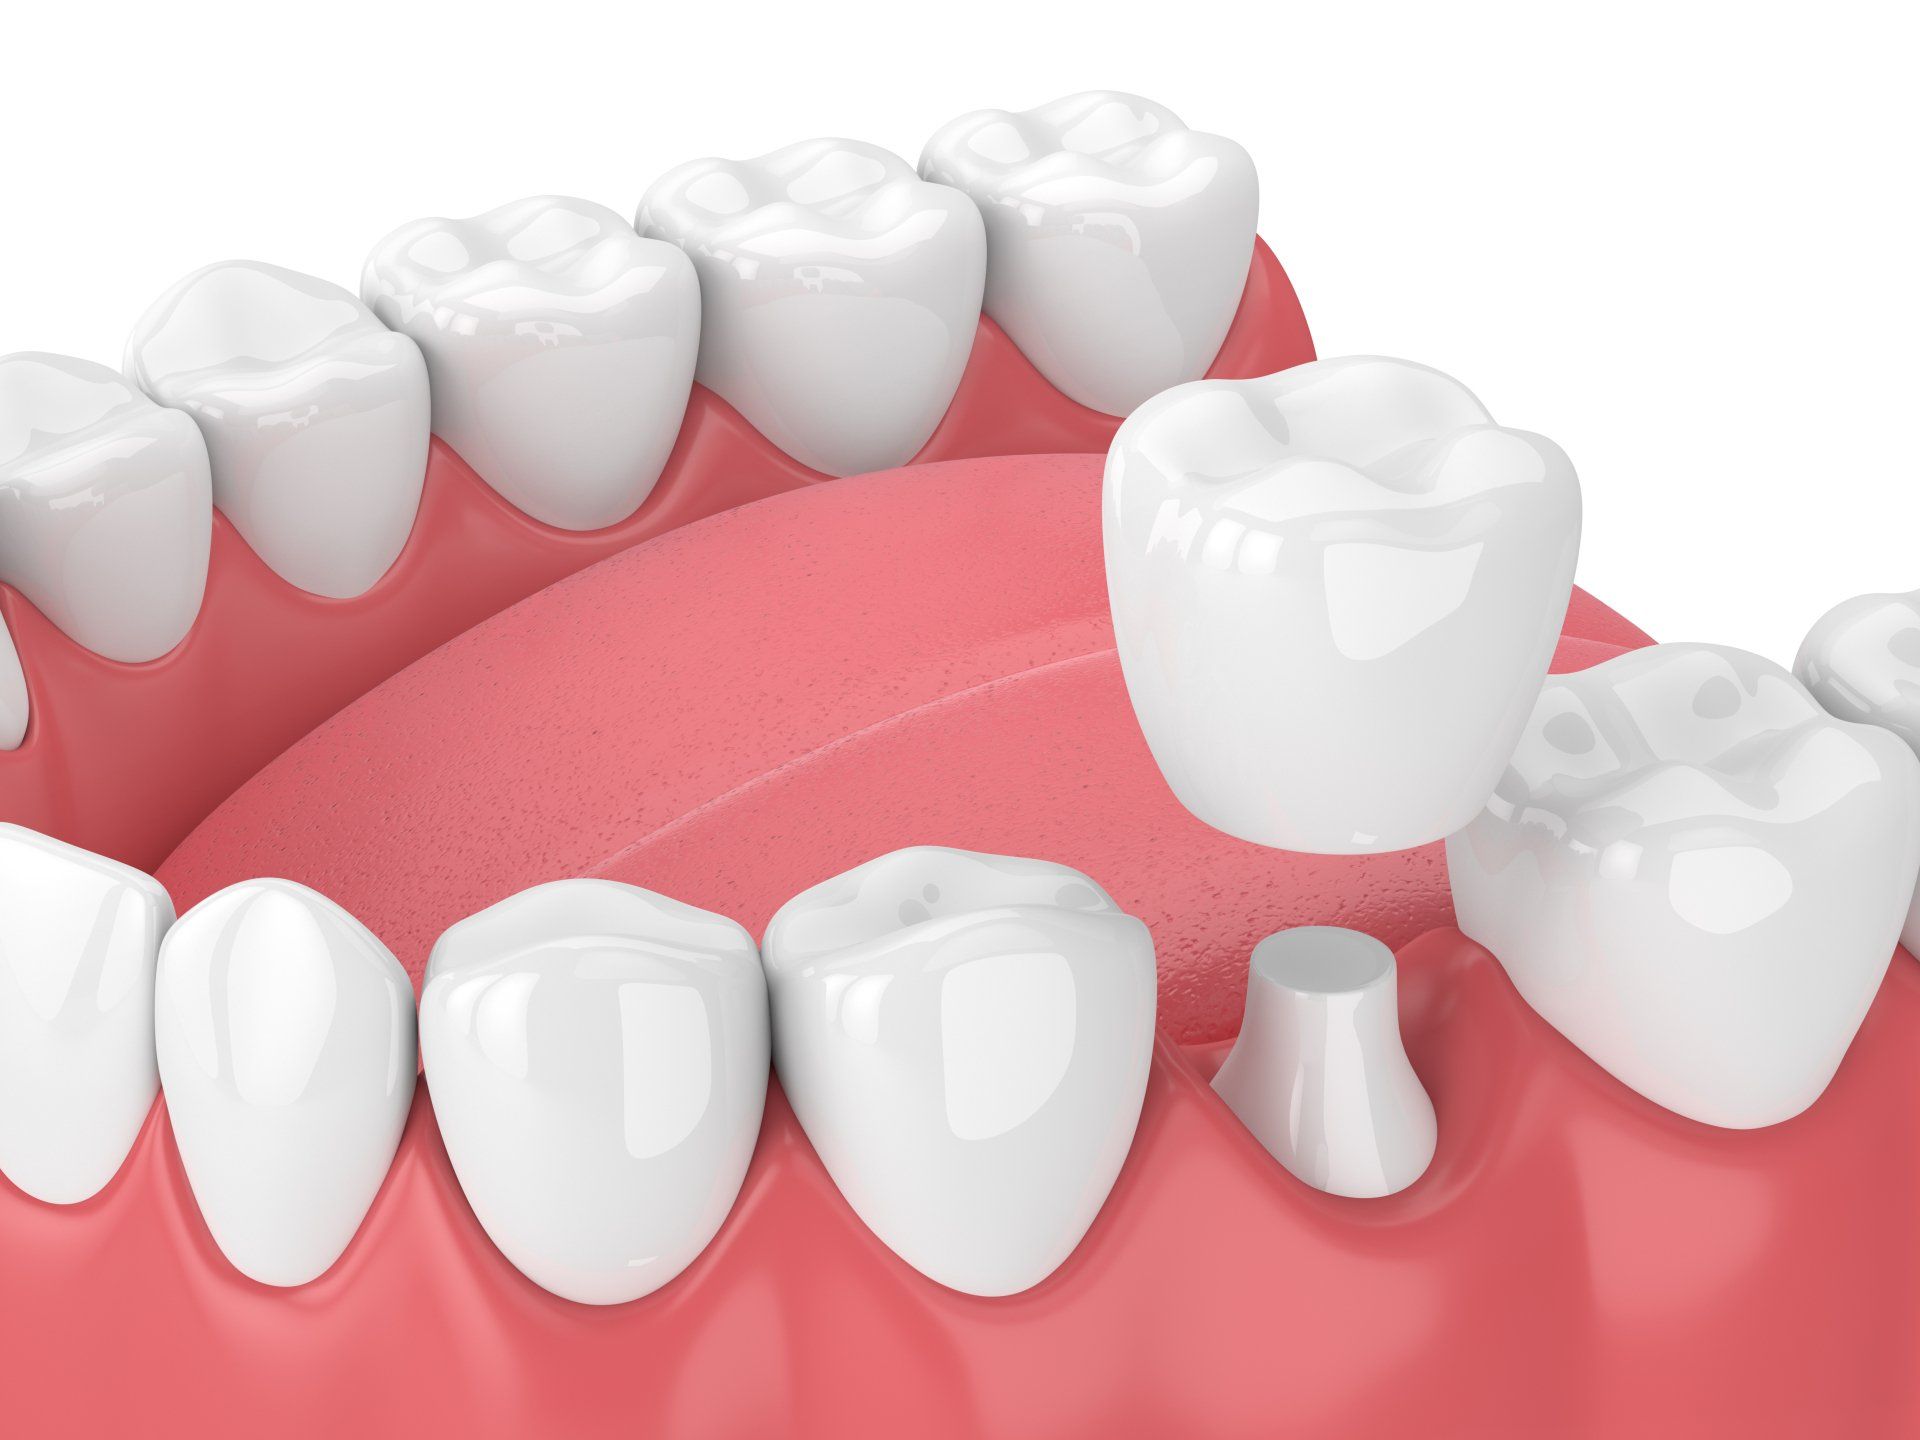 Are Crowns Major Dental?